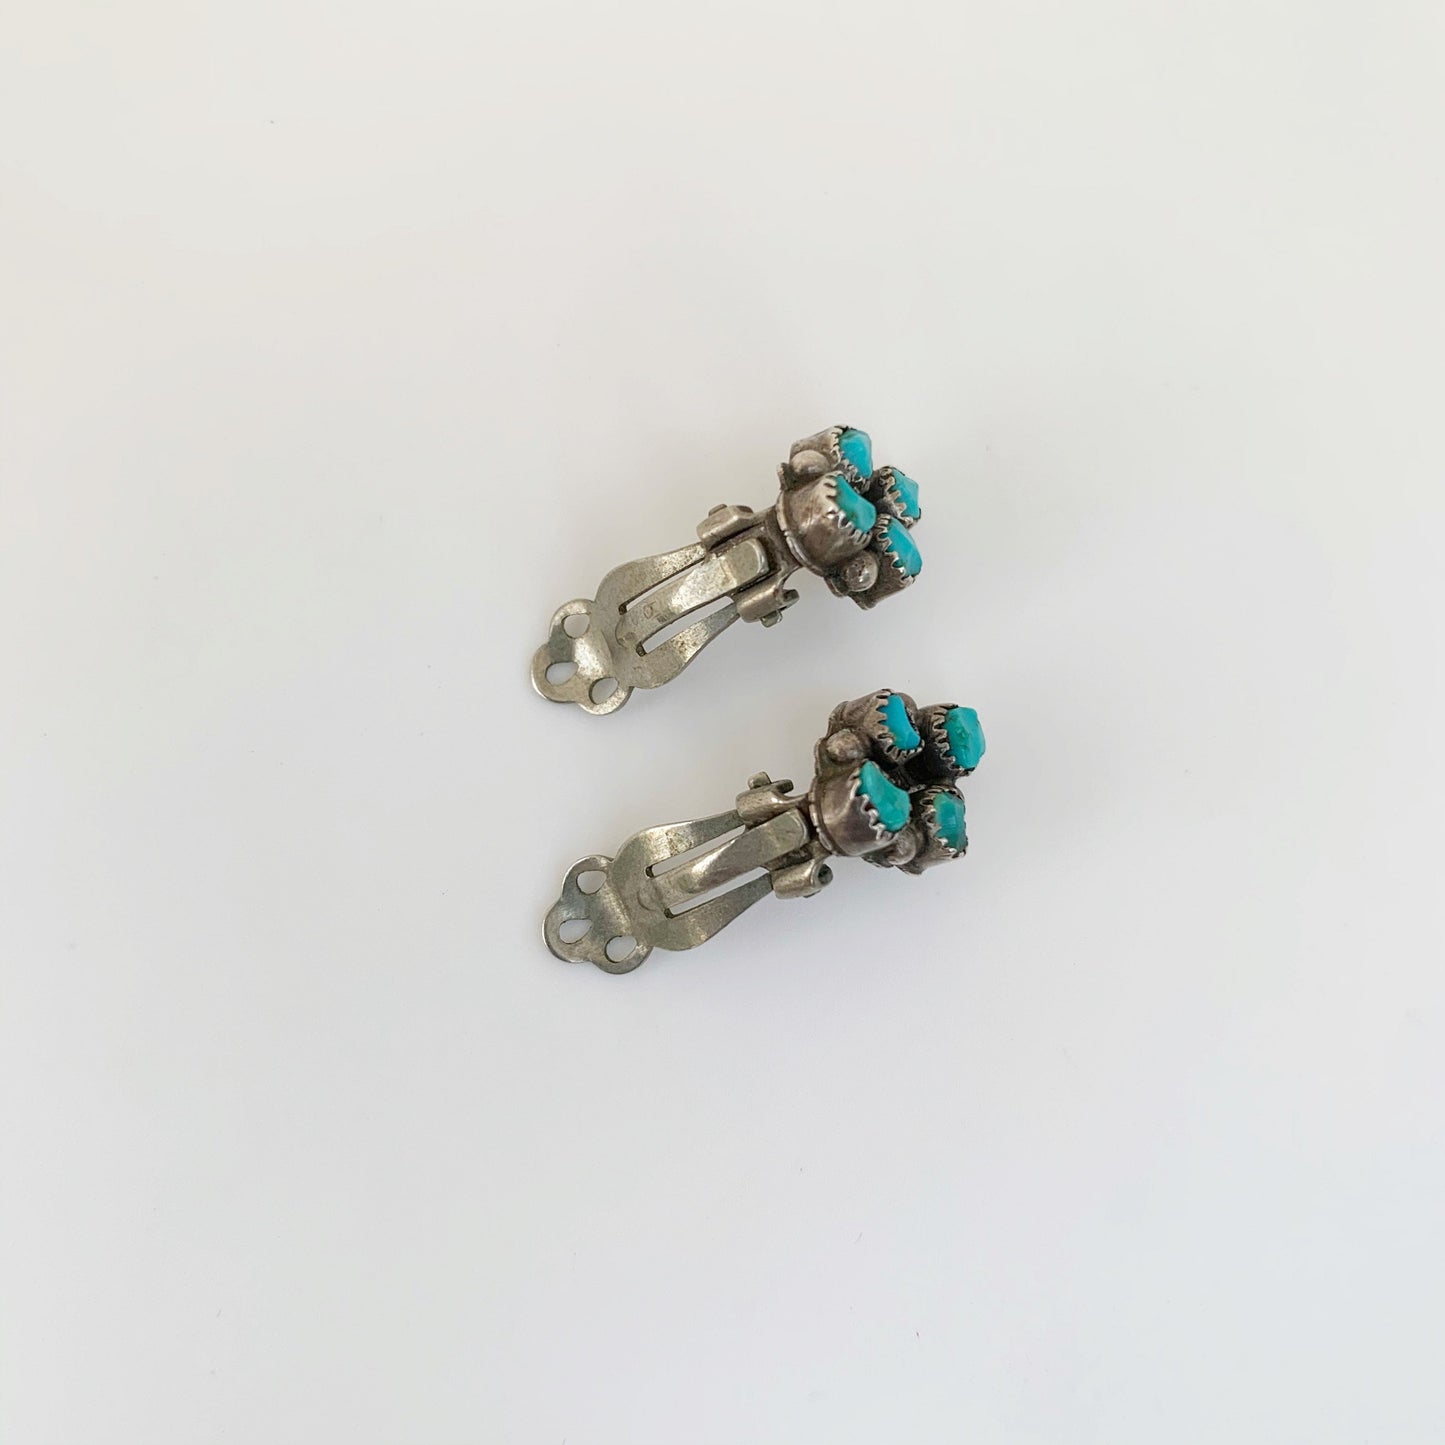 Vintage Turquoise Cluster Earrings | Snake Eye Cluster Earrings | Turquoise Clip On Earrings